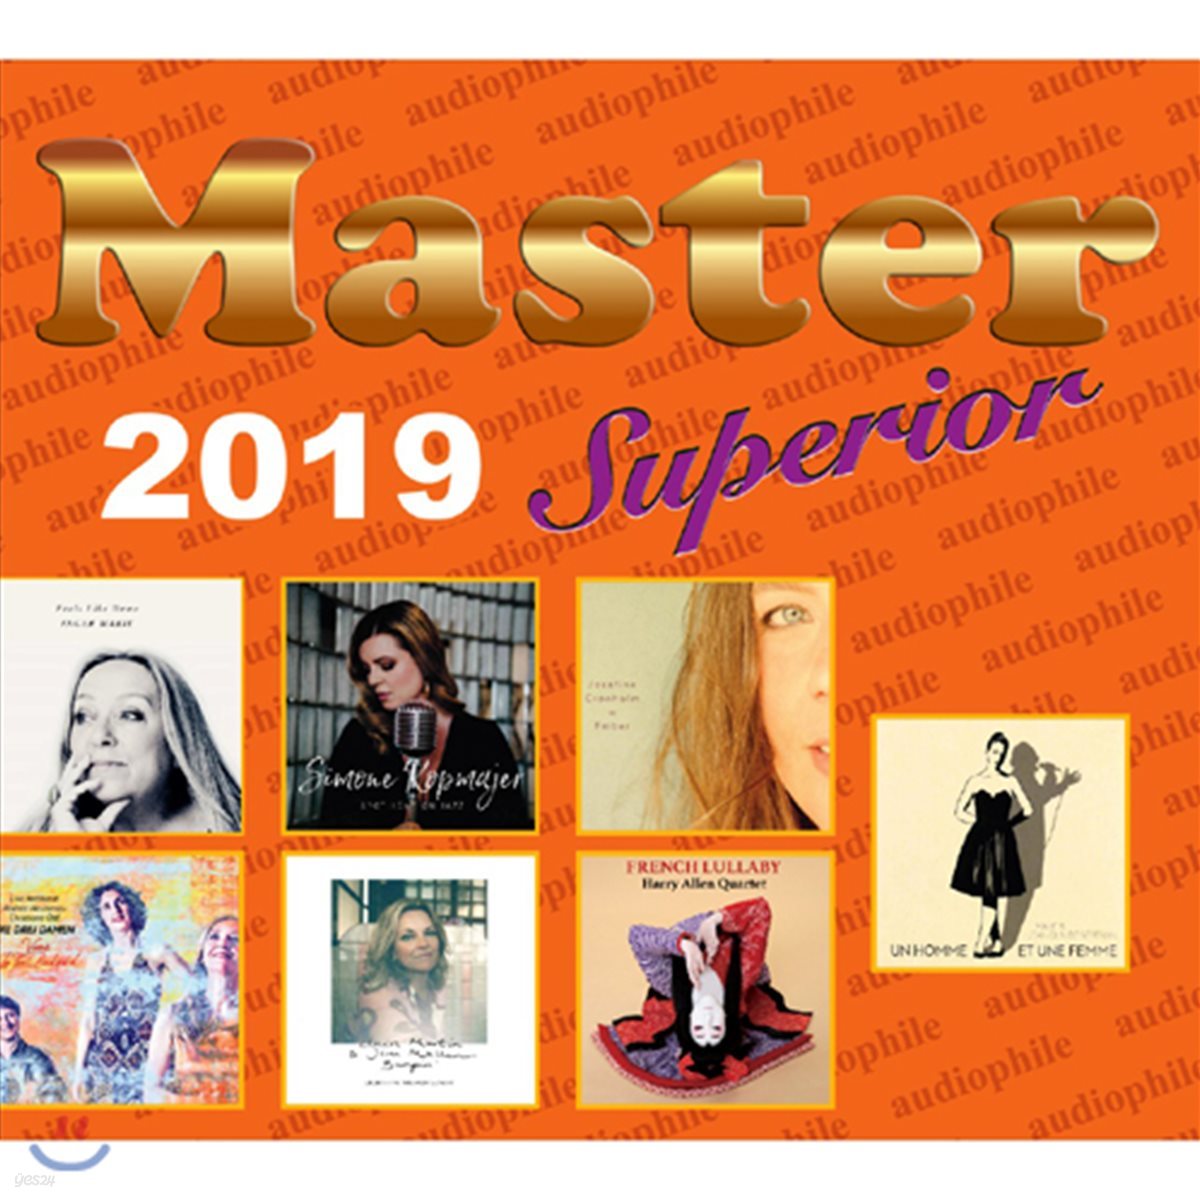 2019 Master Music 레이블 오디오파일 샘플러 (Master Superior 2019)